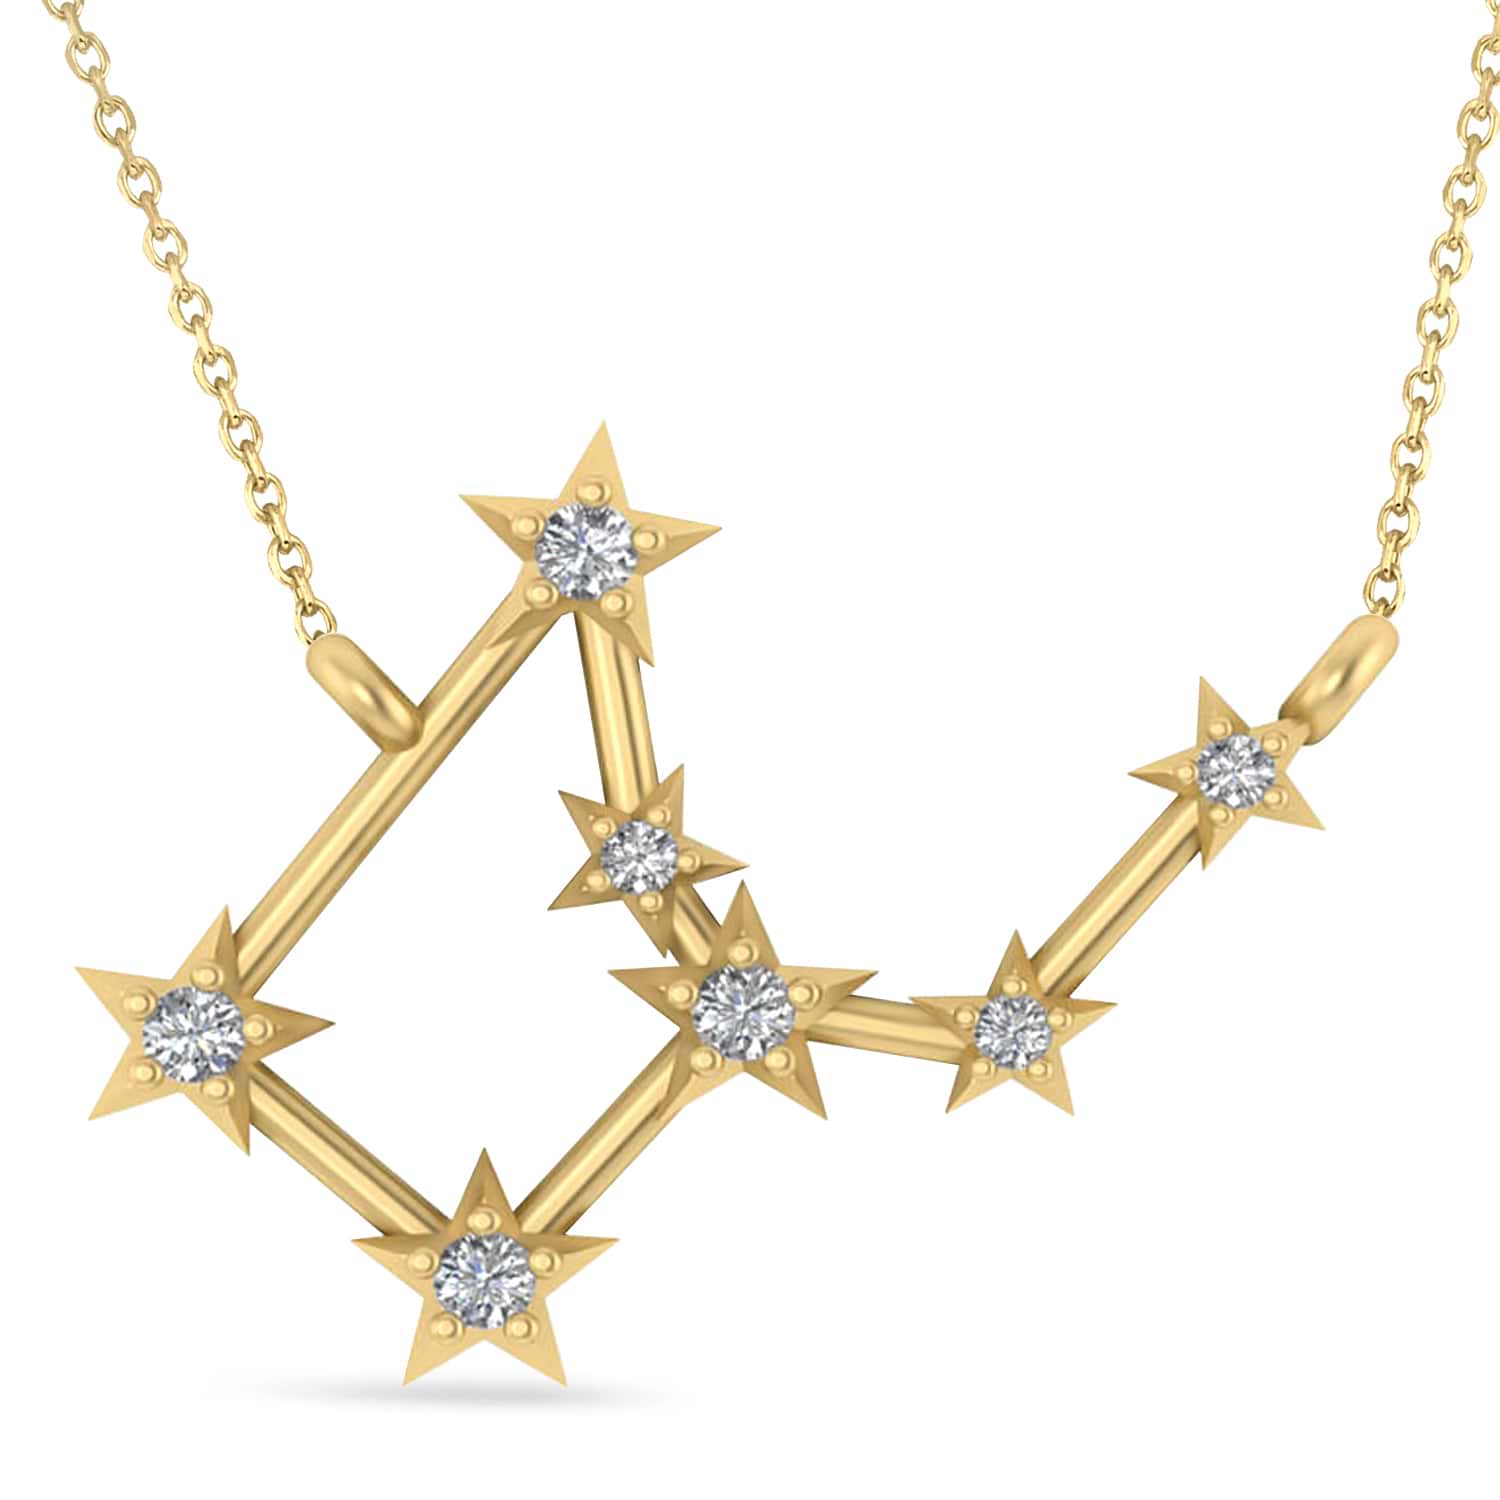 Diamond Virgo Zodiac Constellation Star Necklace 14k Yellow Gold (0.11ct)